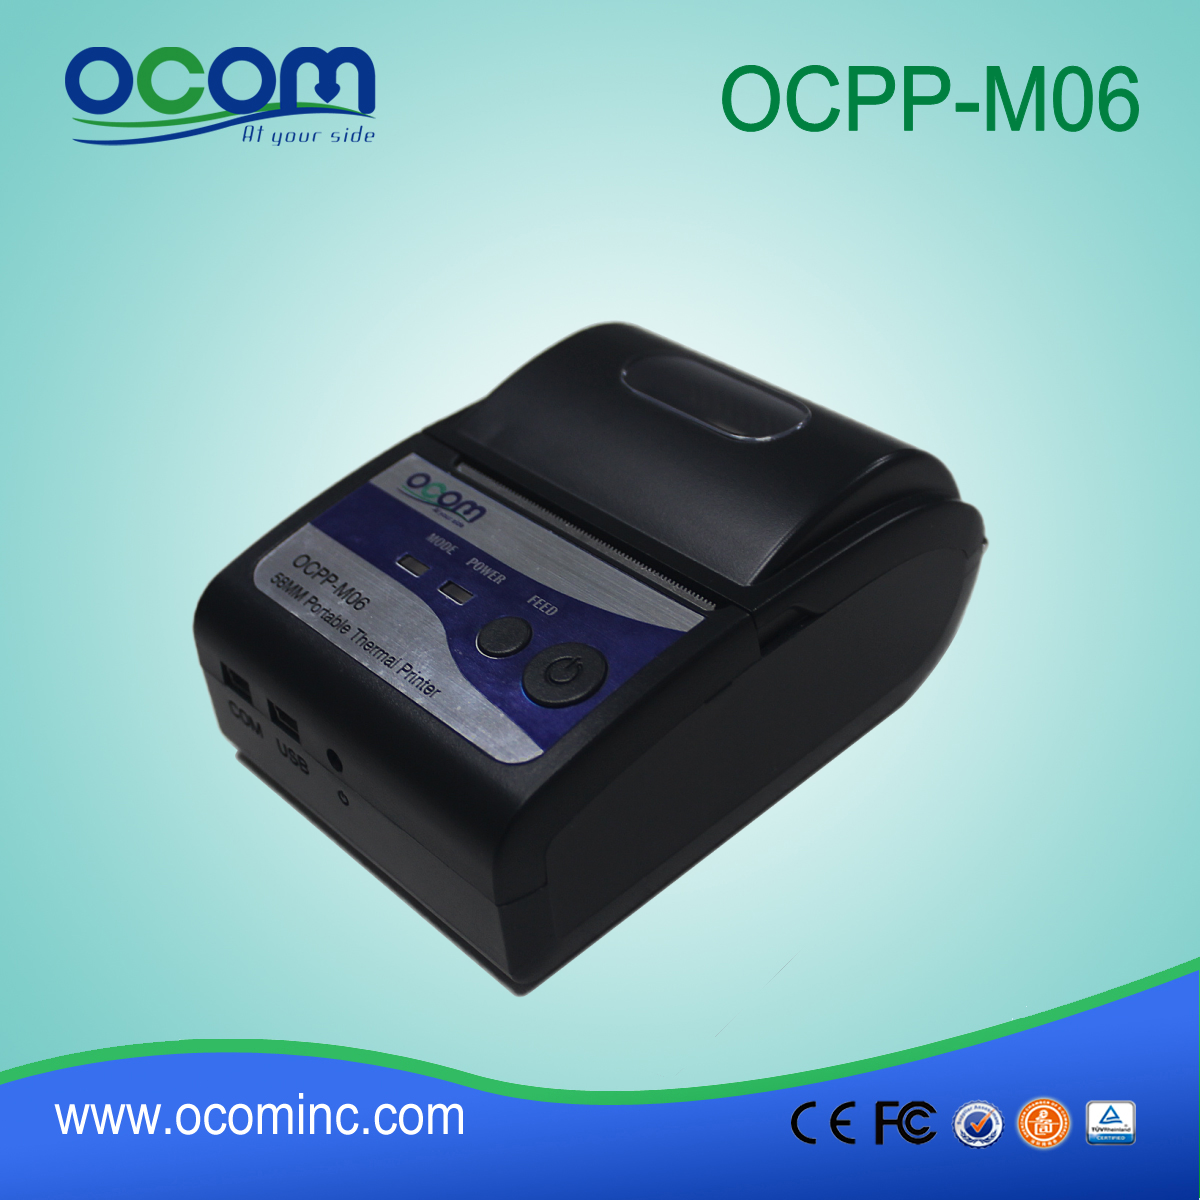 OCPP-M06: OCOM Hot verkopen goedkope 58mm bluetooth printer, 58mm bluetooth printer